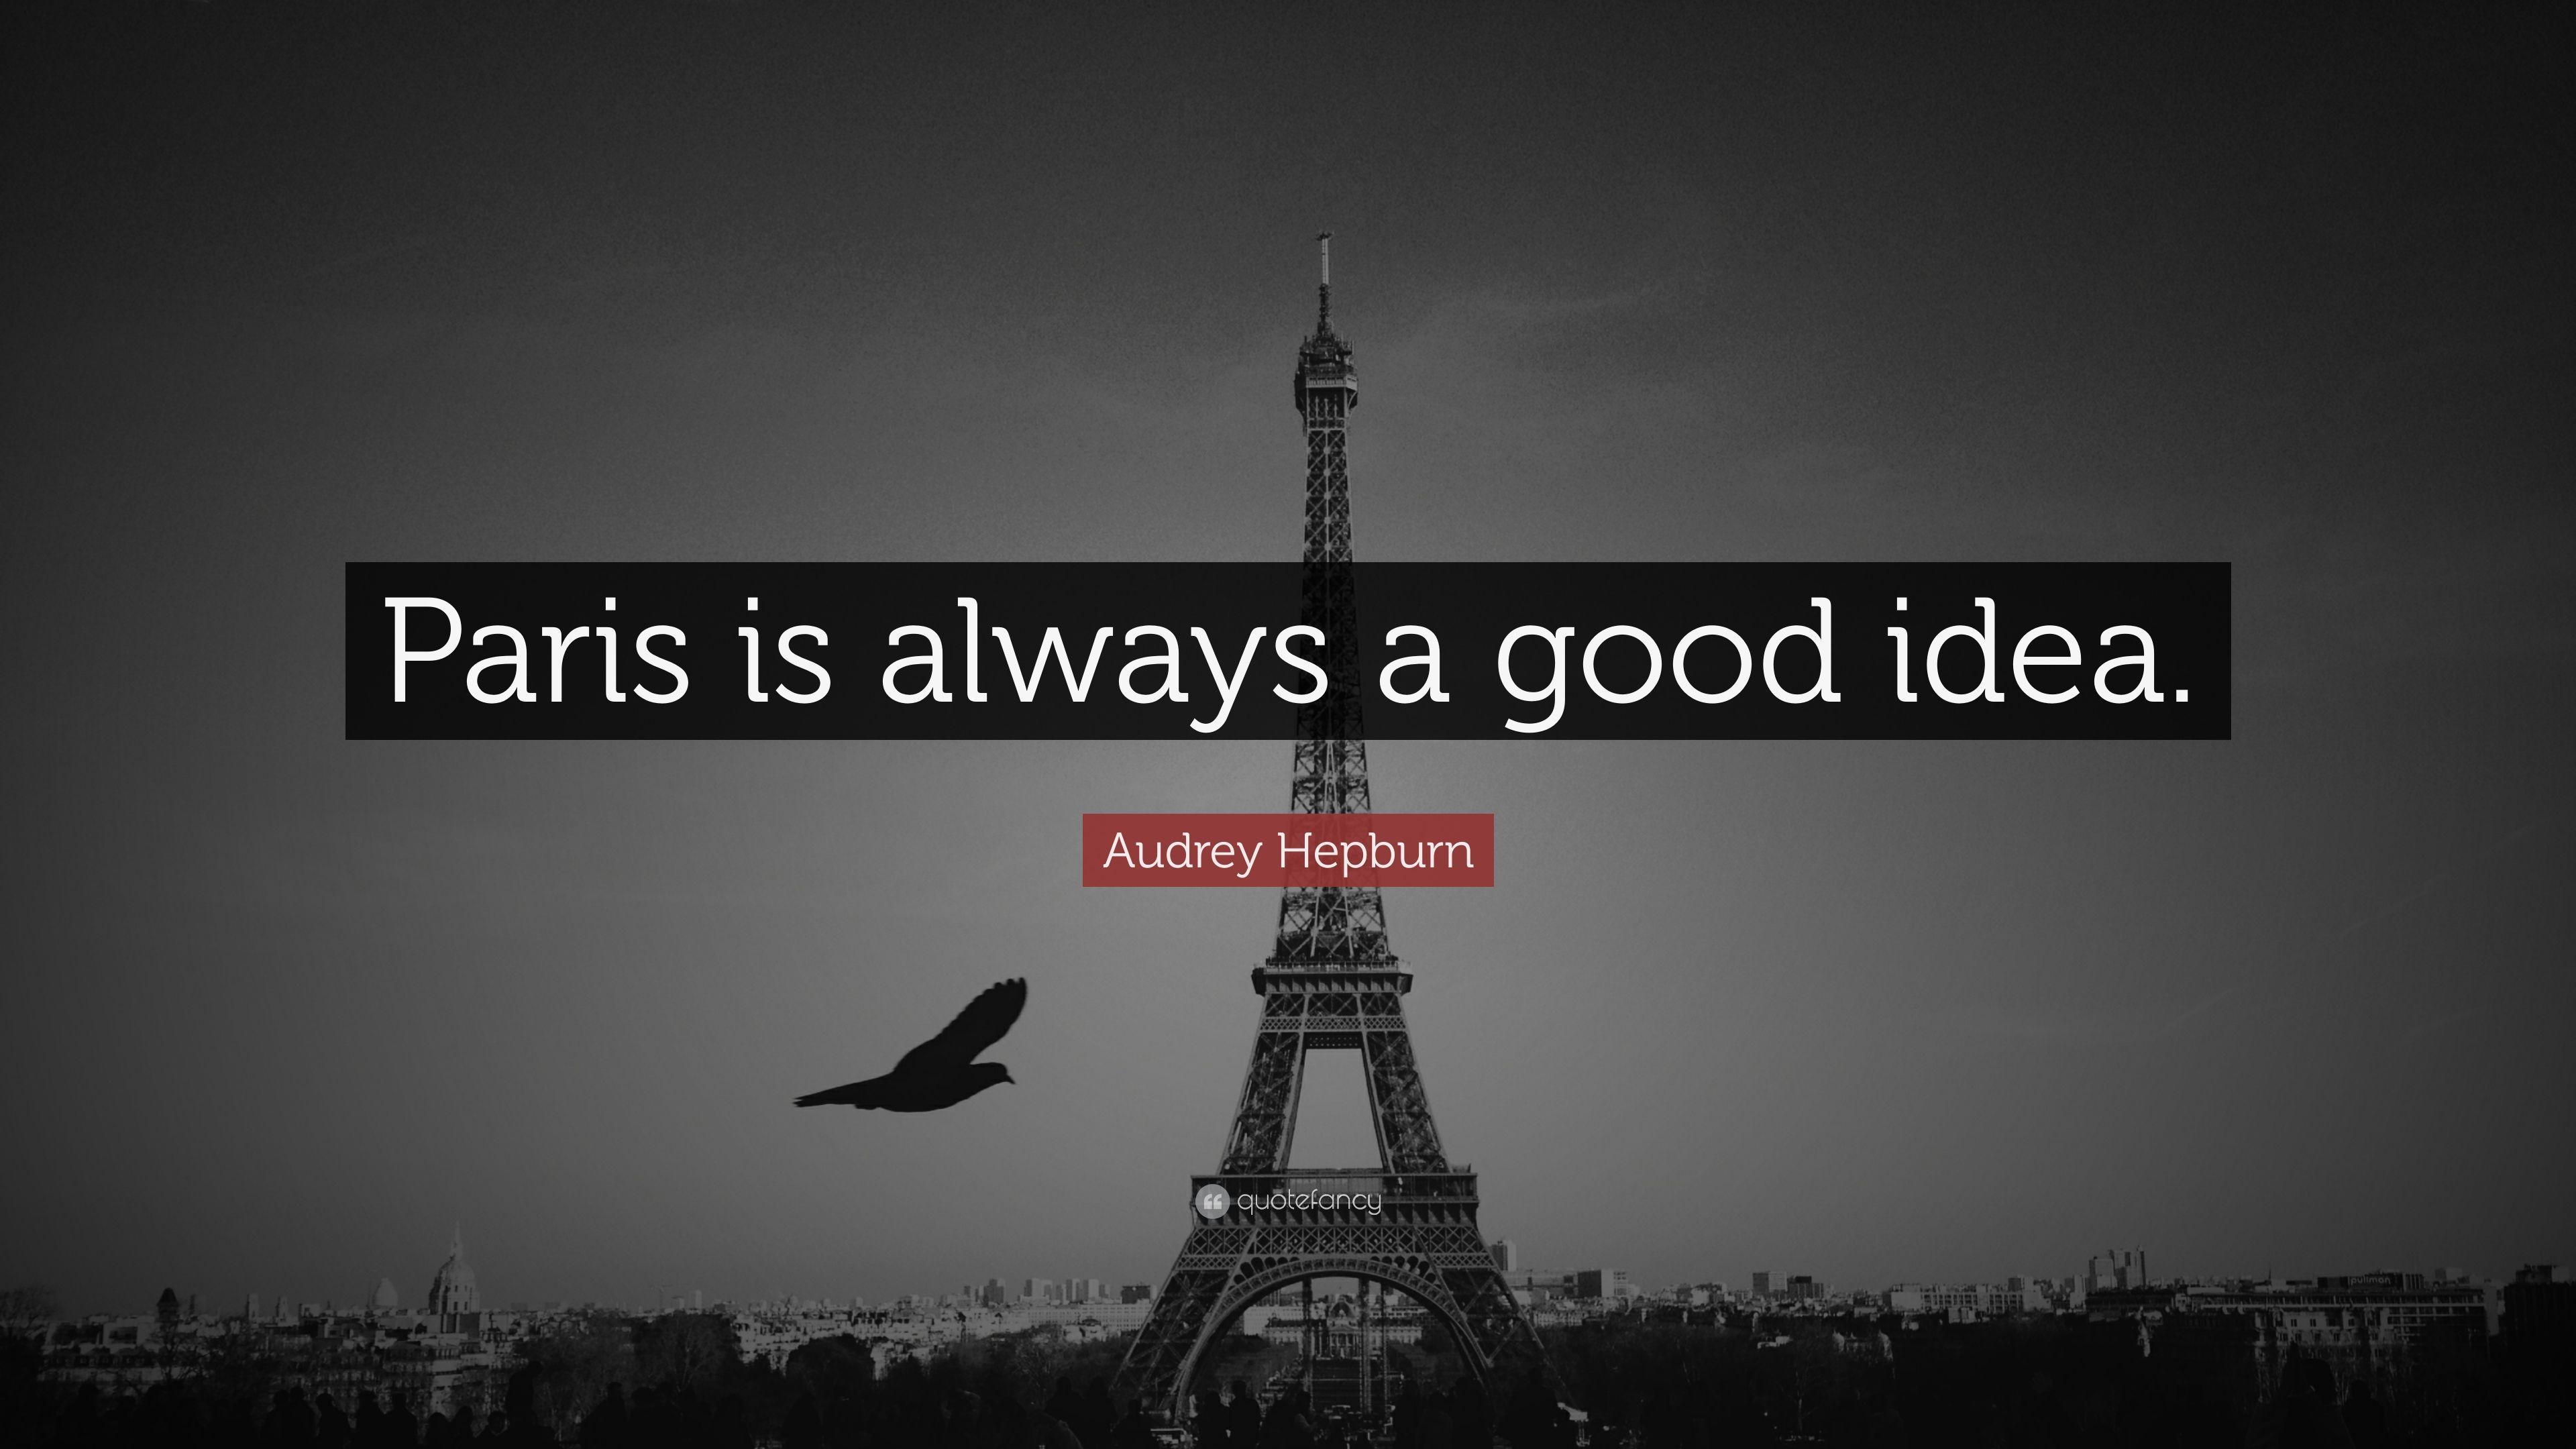 Audrey Hepburn Quote: “Paris is always a good idea.” 11